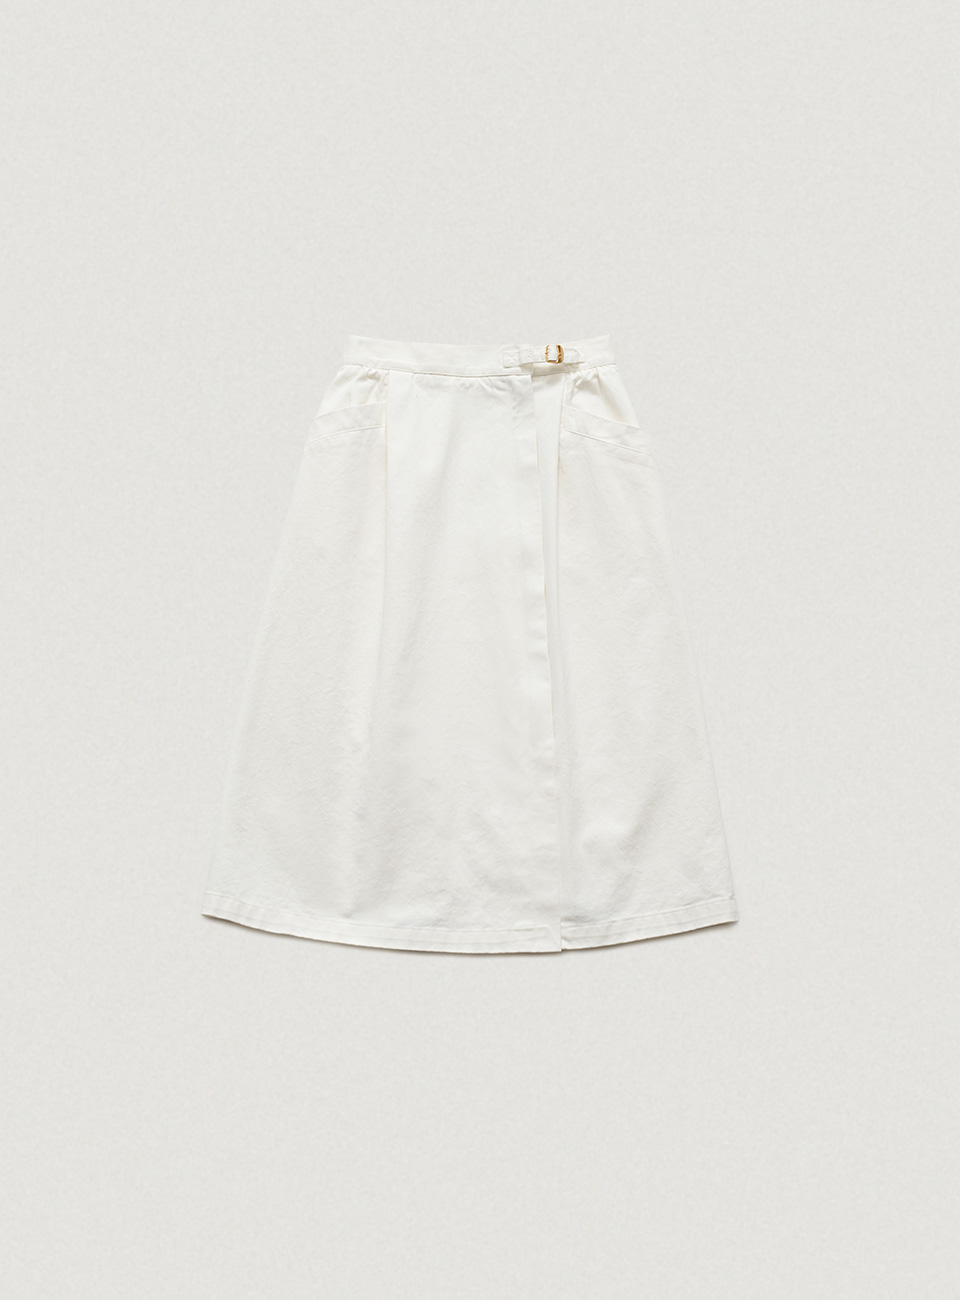 Rustic Cotton Skirt [6월 중순 순차 배송]